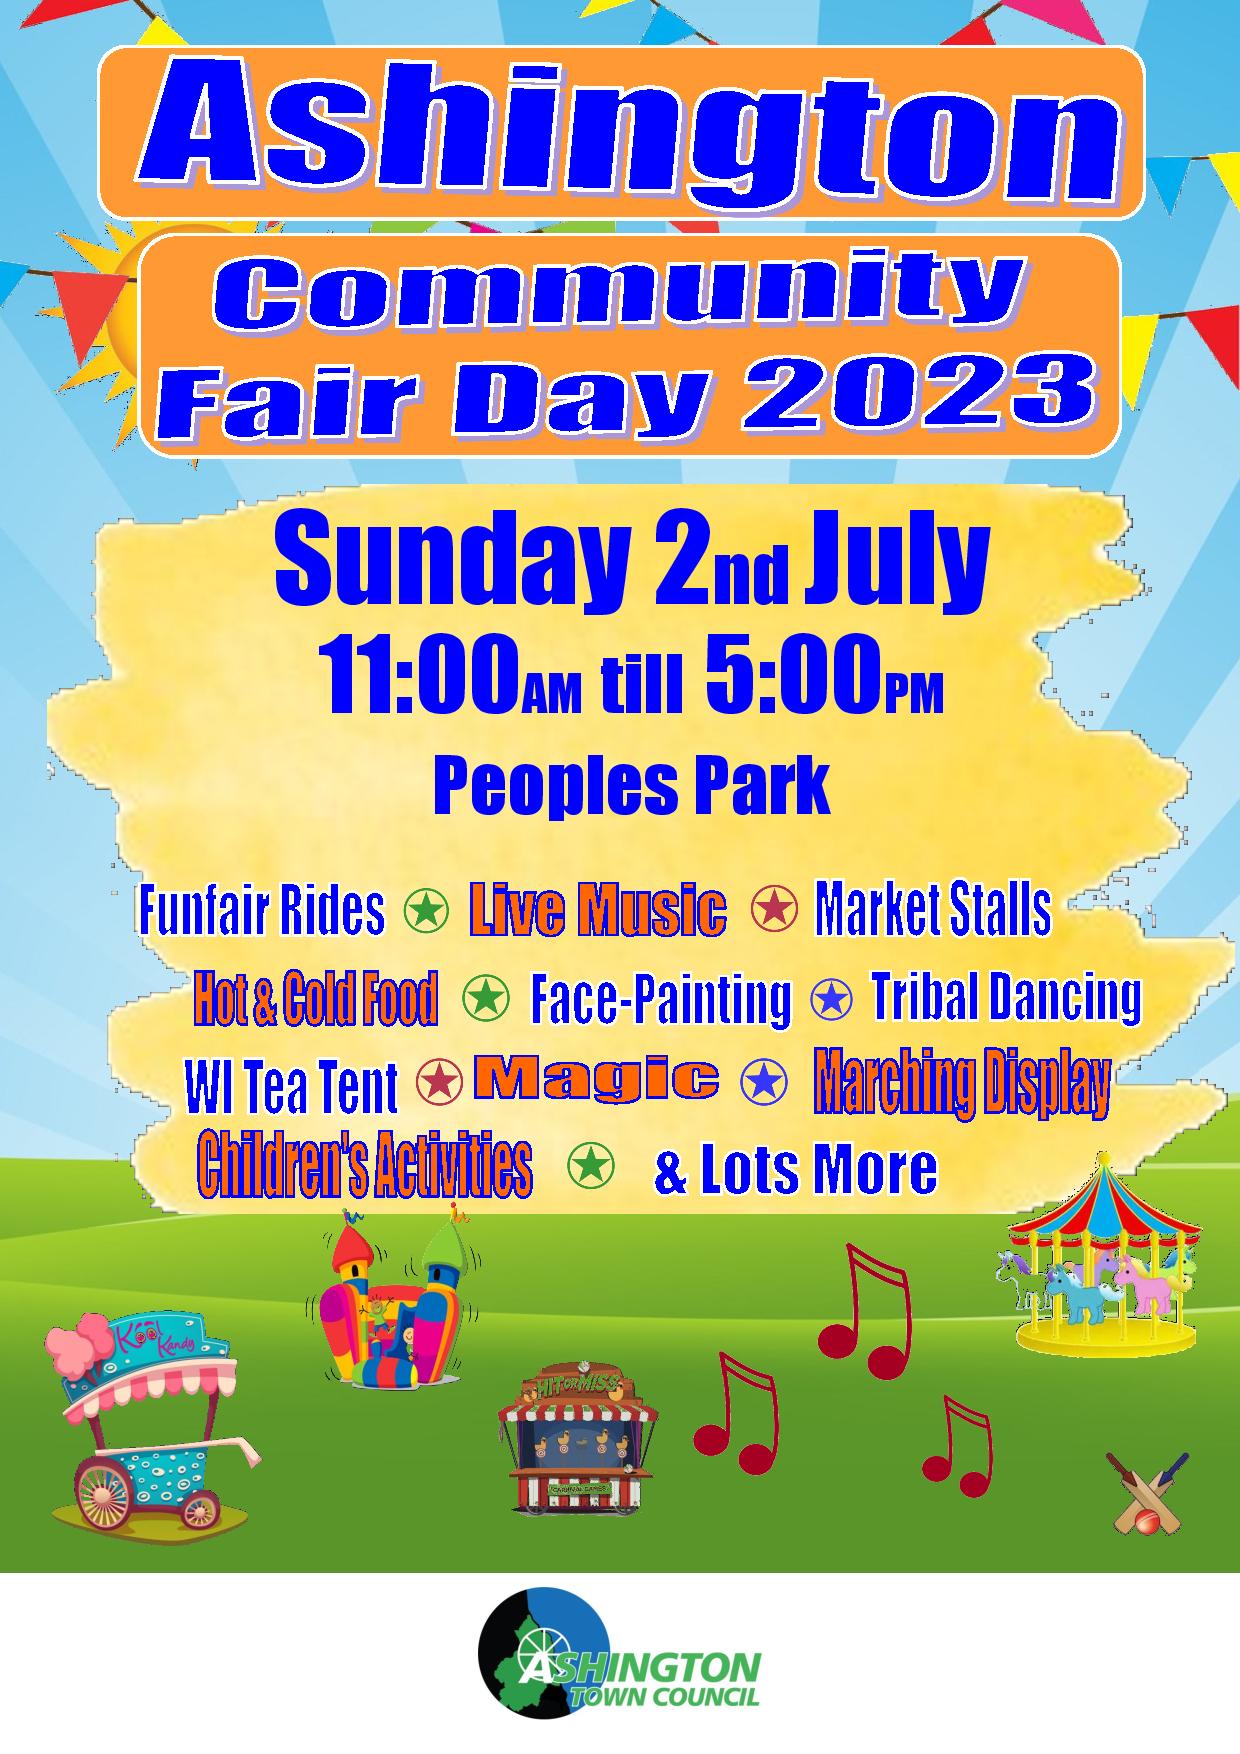 Ashington Community Fair Day poster 2023